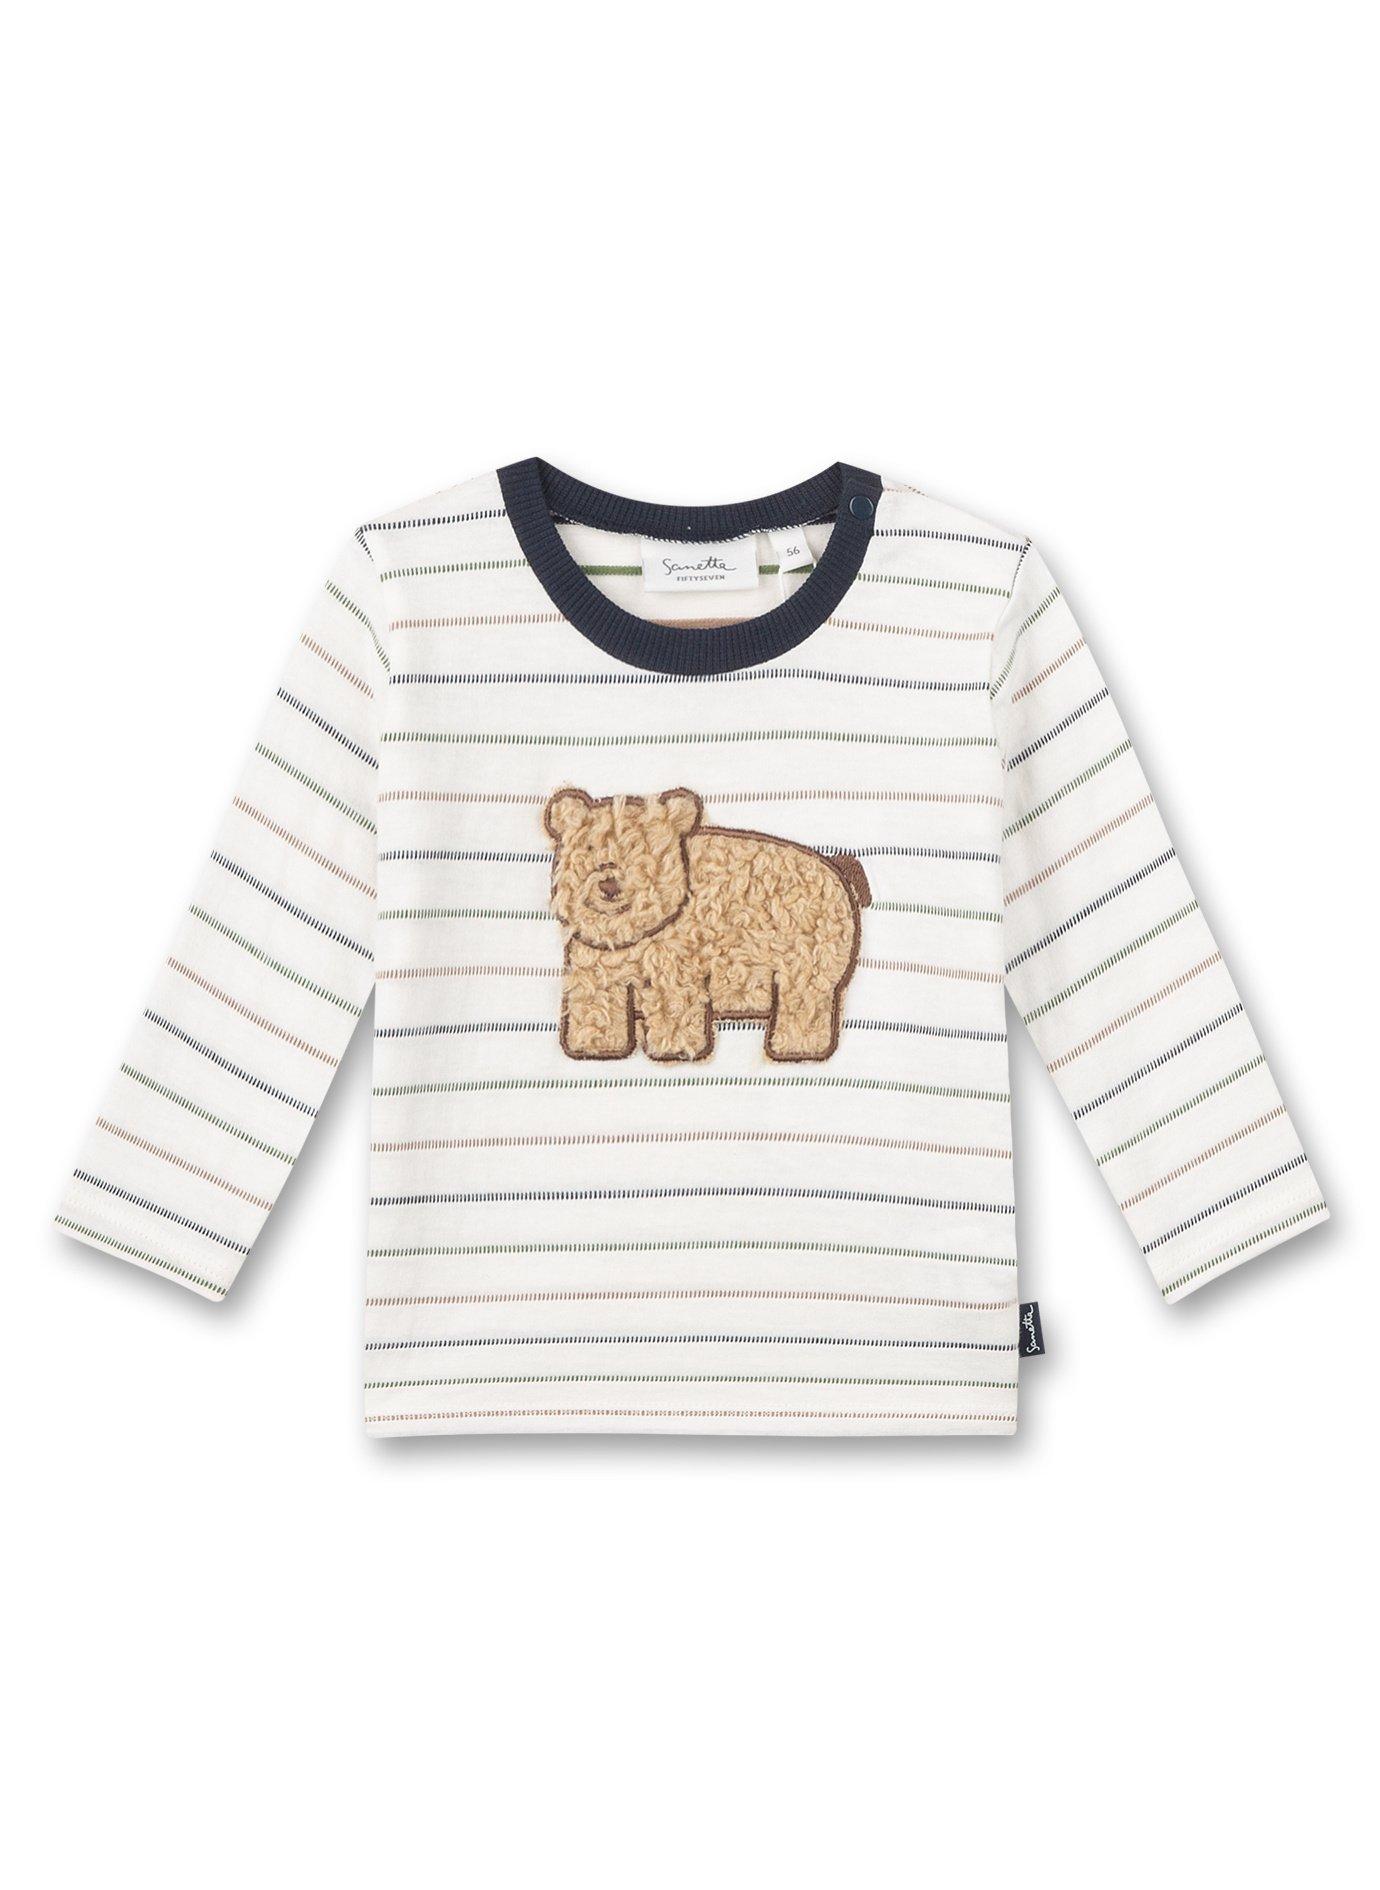 Sanetta Fiftyseven  Baby Shirt Teddy ringel 